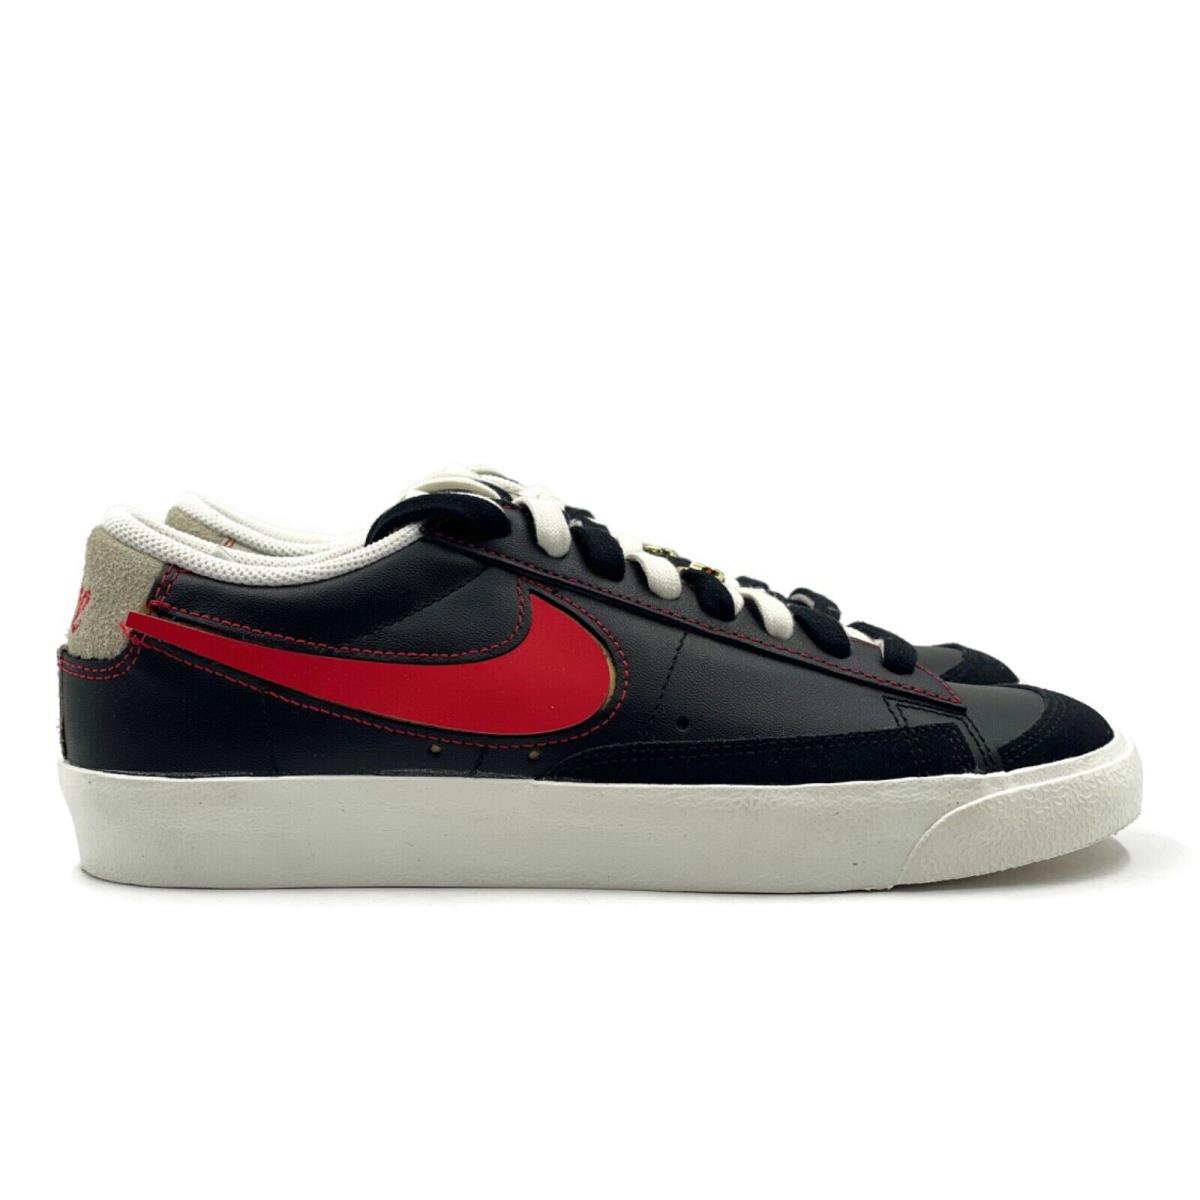 Nike Blazer Low 77 Prm Men Causal Retro Skate Shoe Black Athletic Sneaker - Black Gray White Red Blue